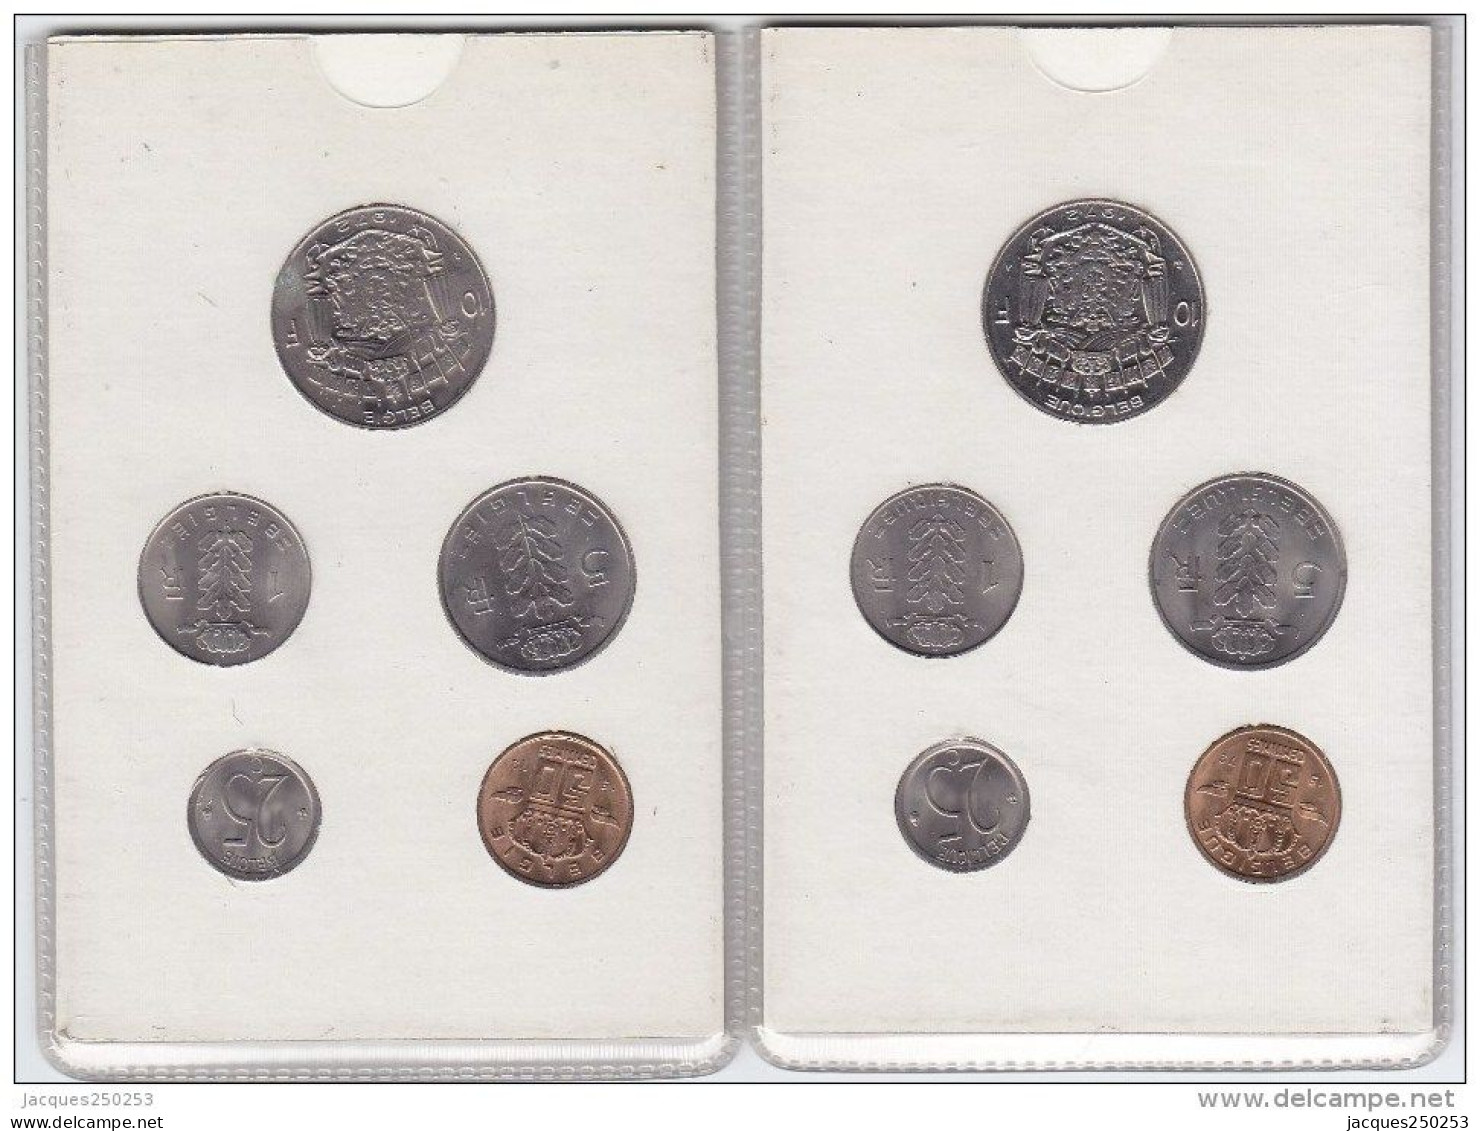 SET 1971-1972-1973-1974 Fleurs De Coins - FDC, BU, BE & Coffrets